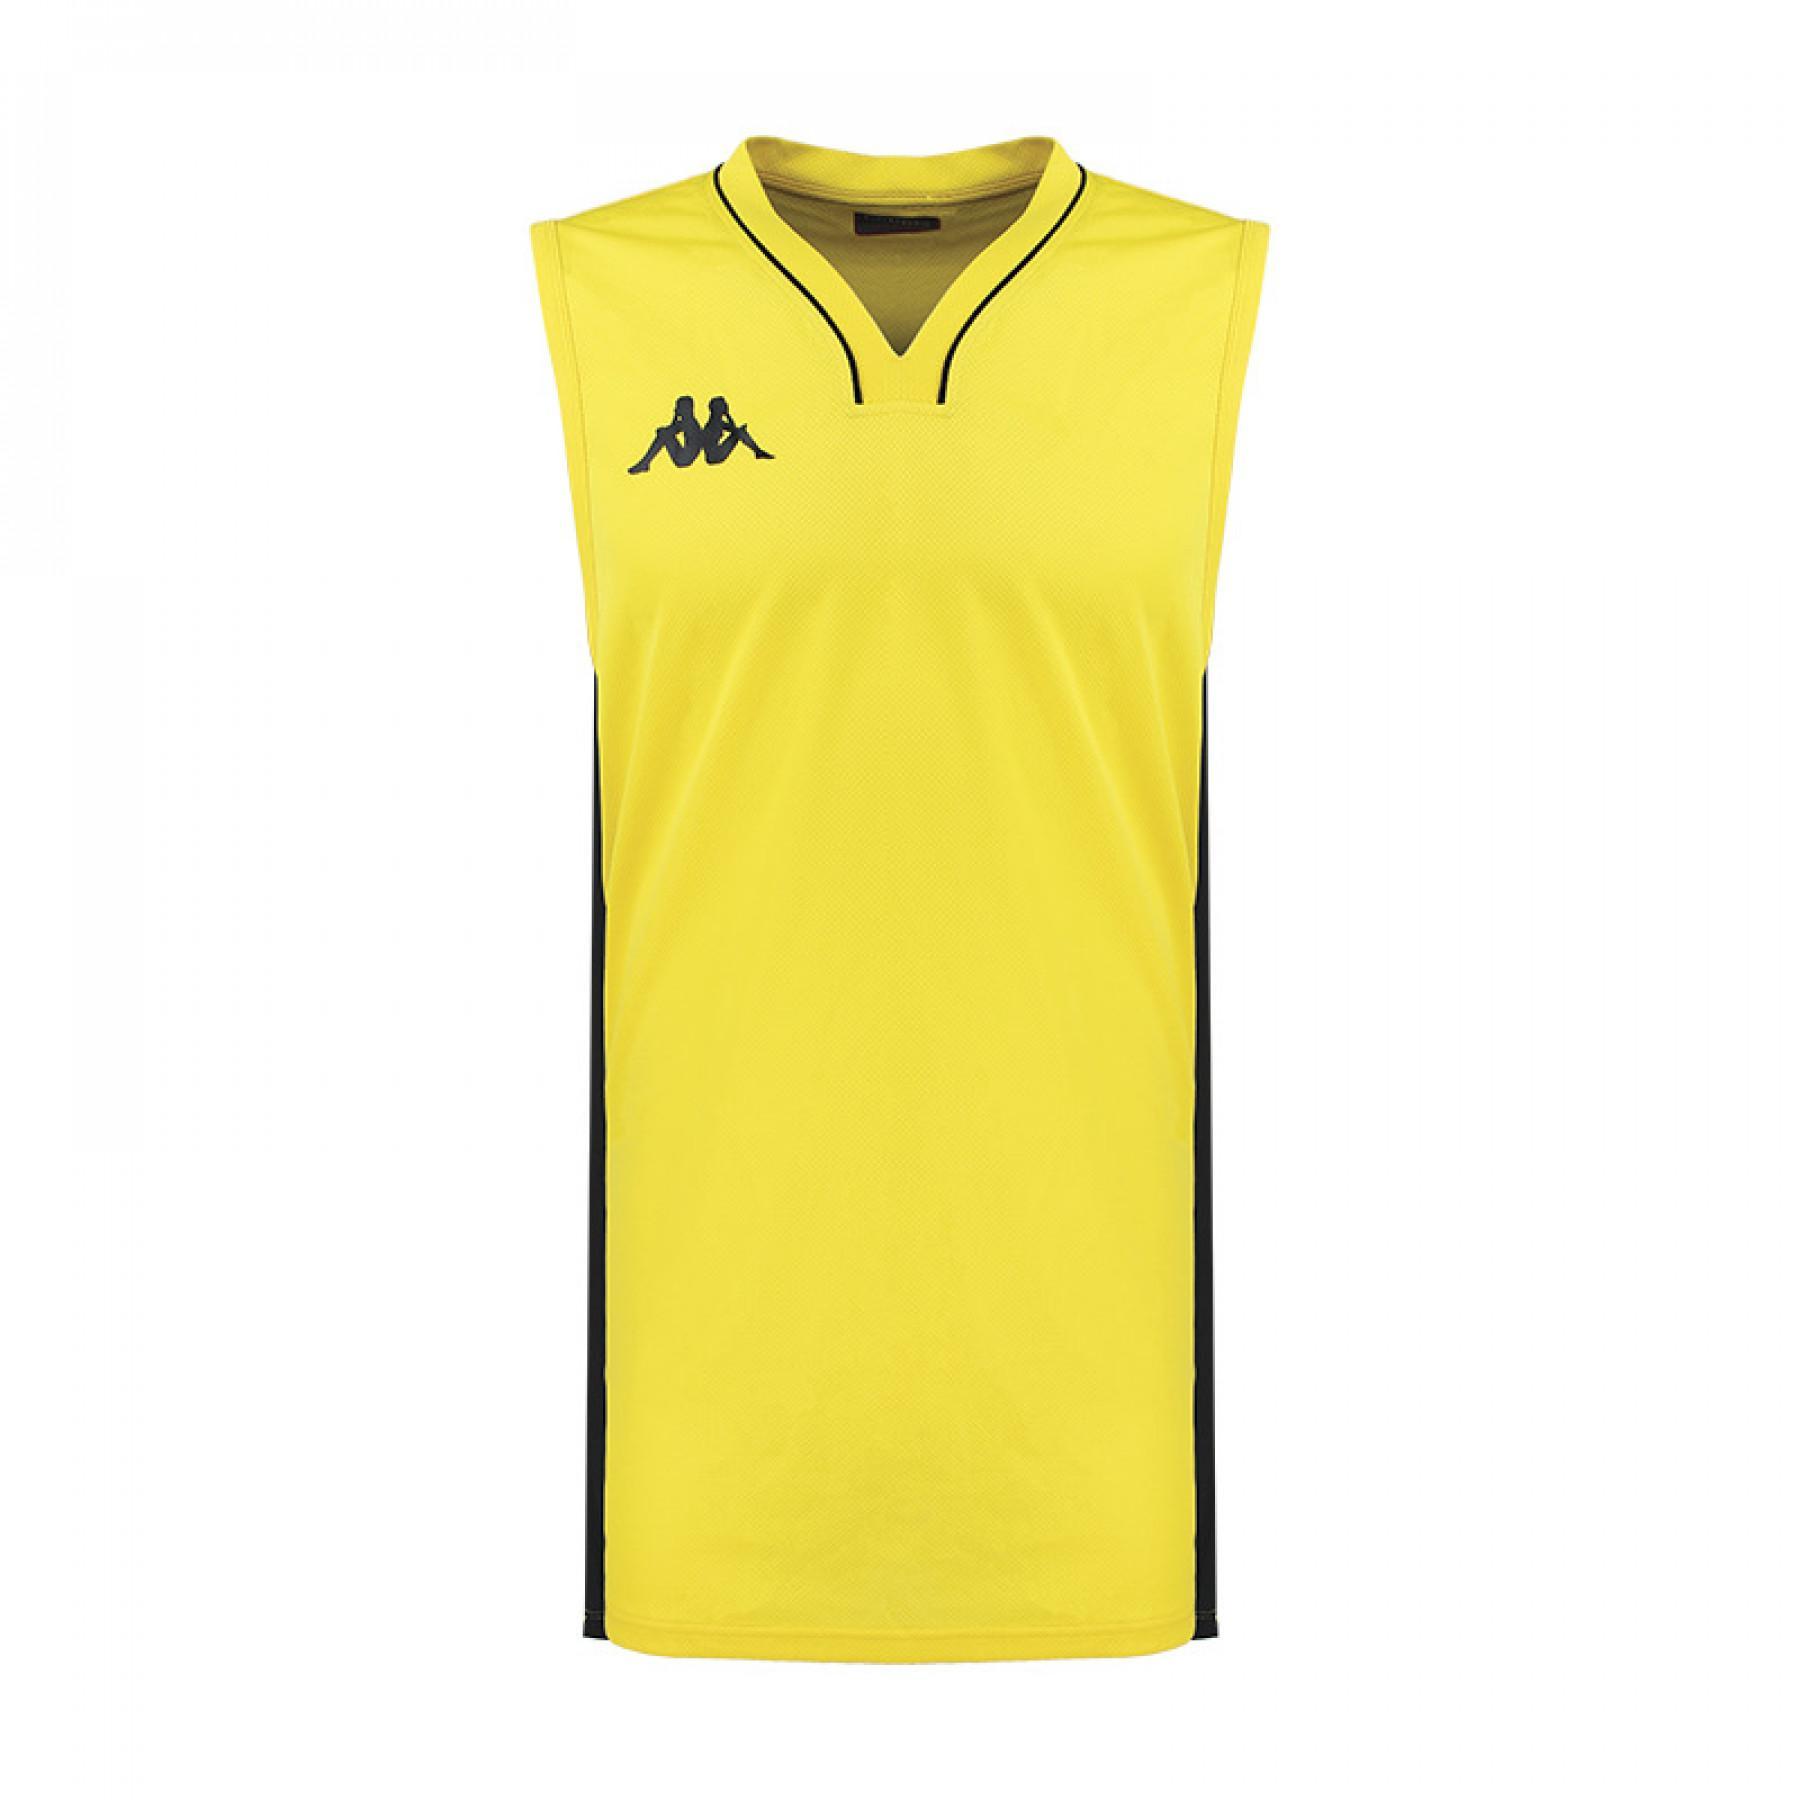 Children's jersey Kappa - Basketball Jersey - Sportswear Clothing